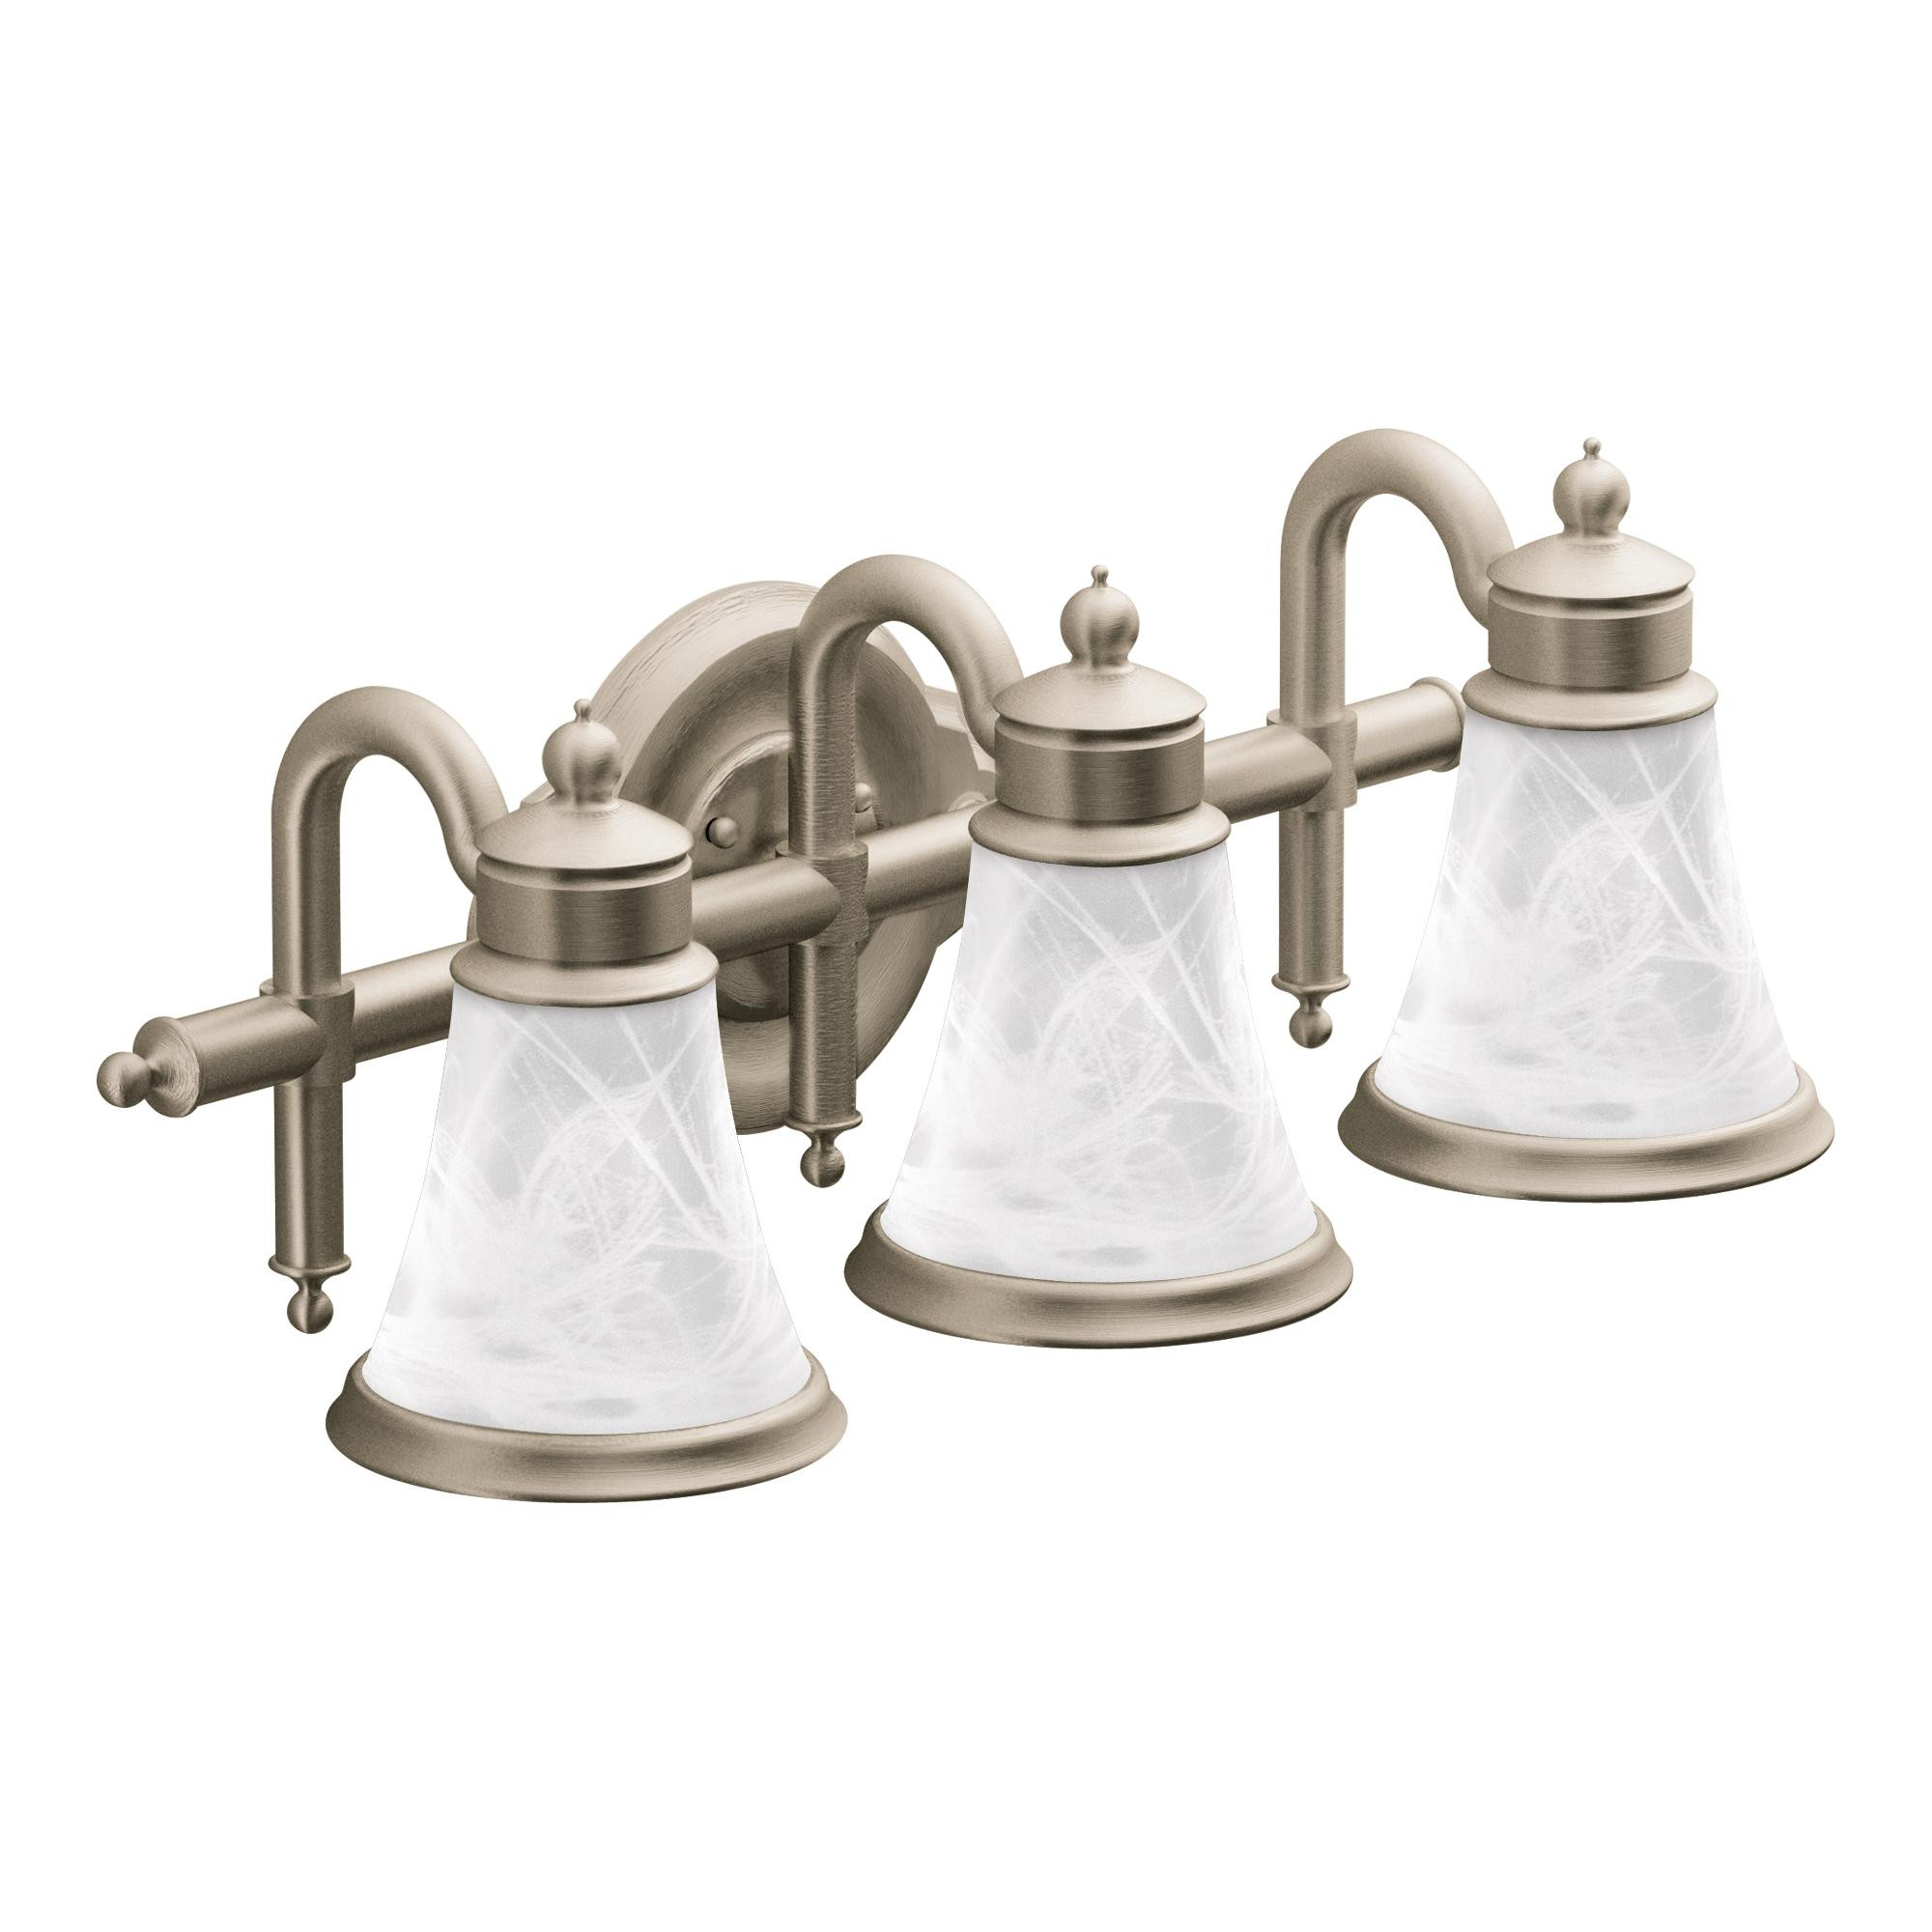 Replacement Globes For Bathroom Lights
 Moen YB9863BN Waterhill Three Globe Bath Light Brushed